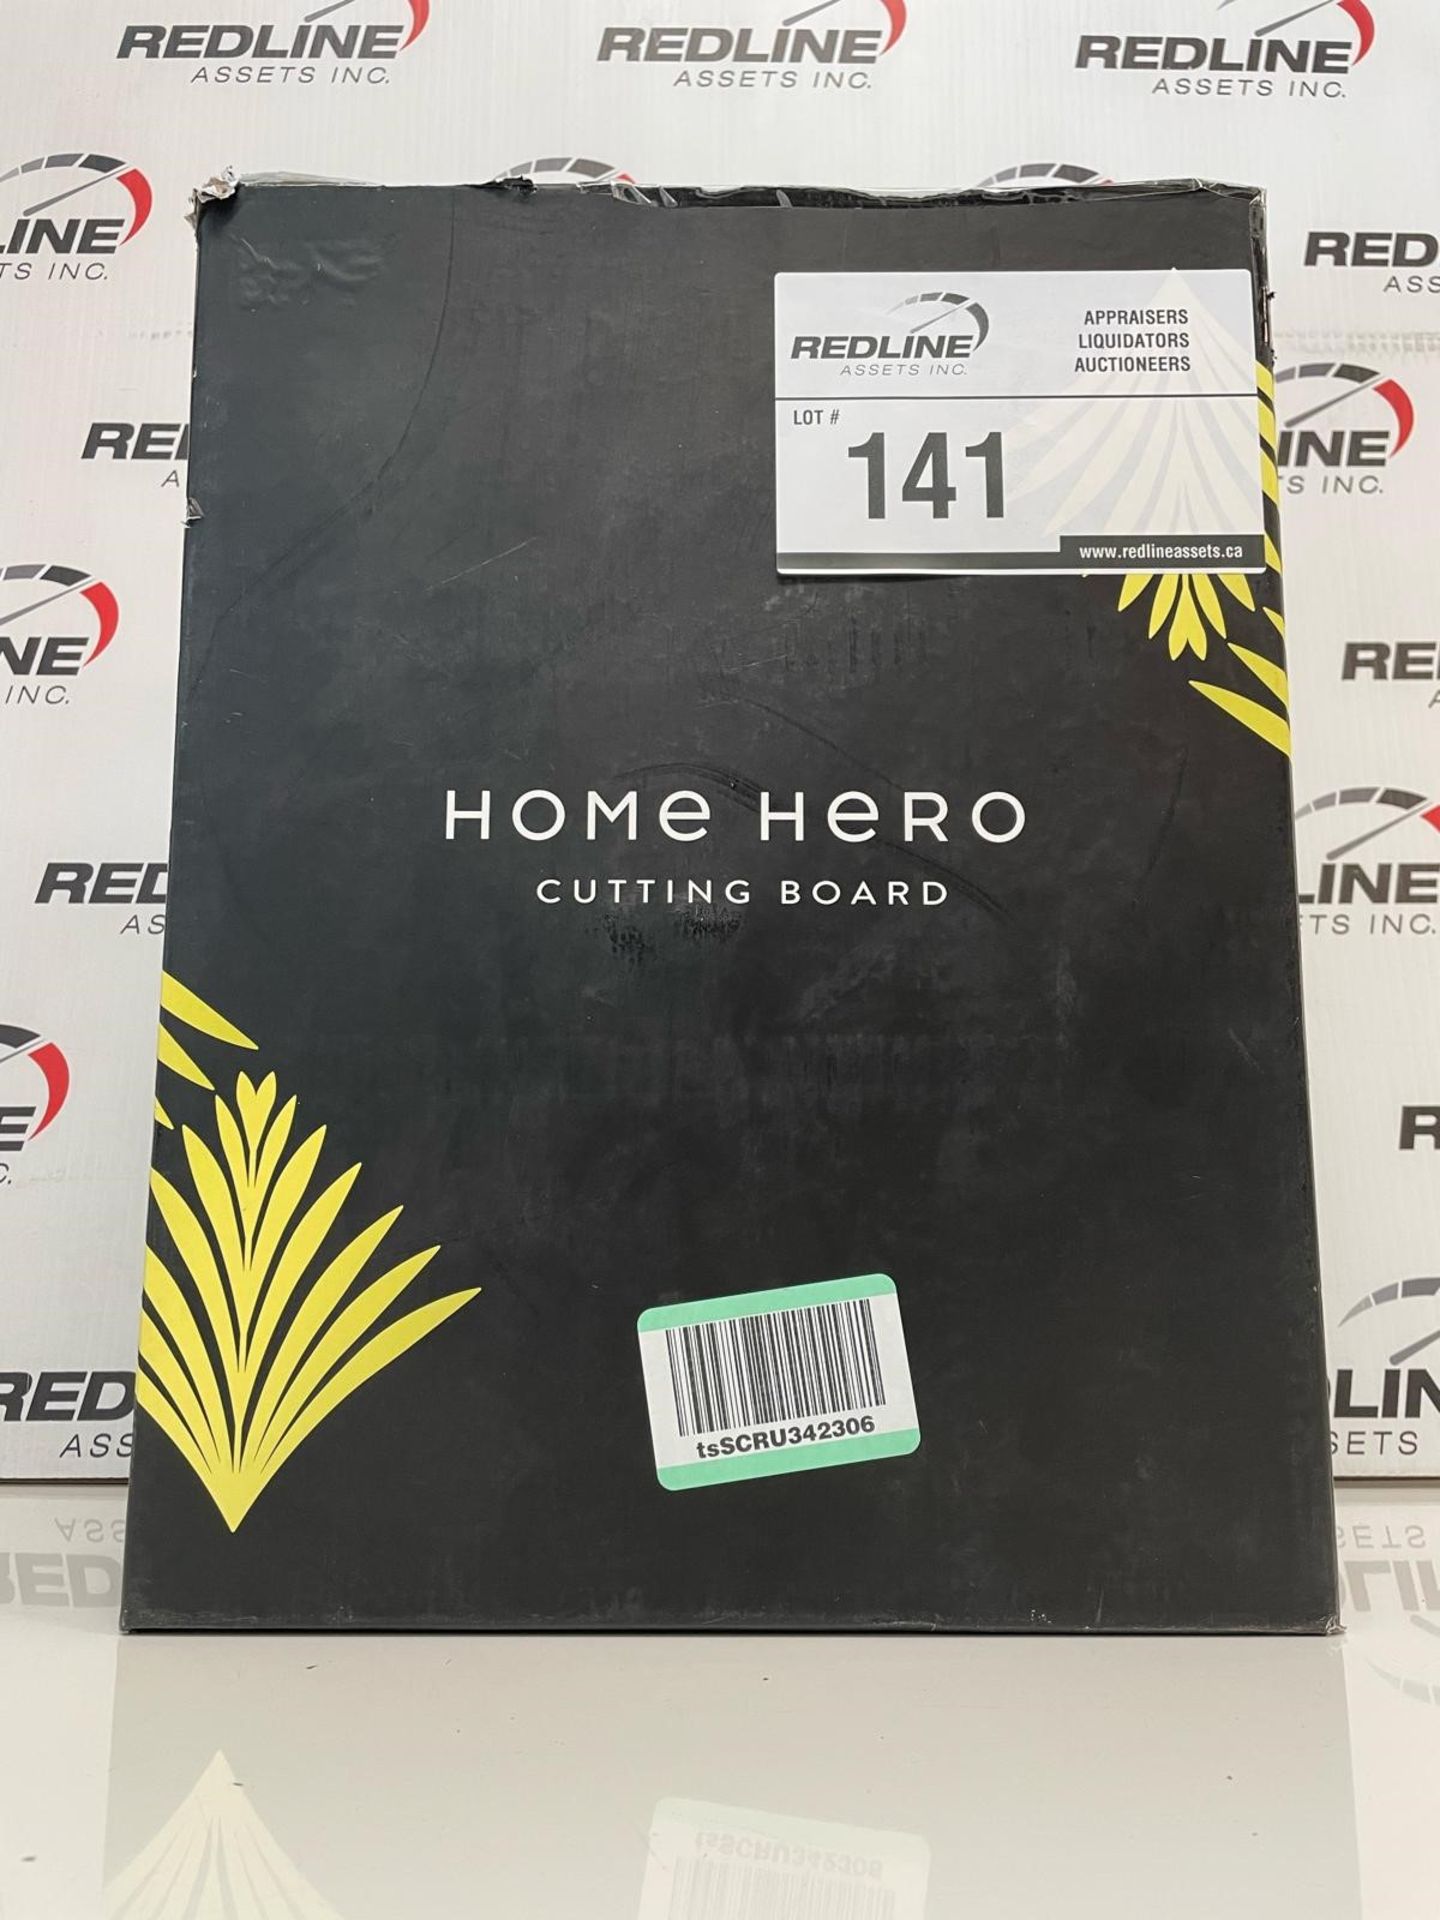 Home Hero - Cutting Board - Image 2 of 2